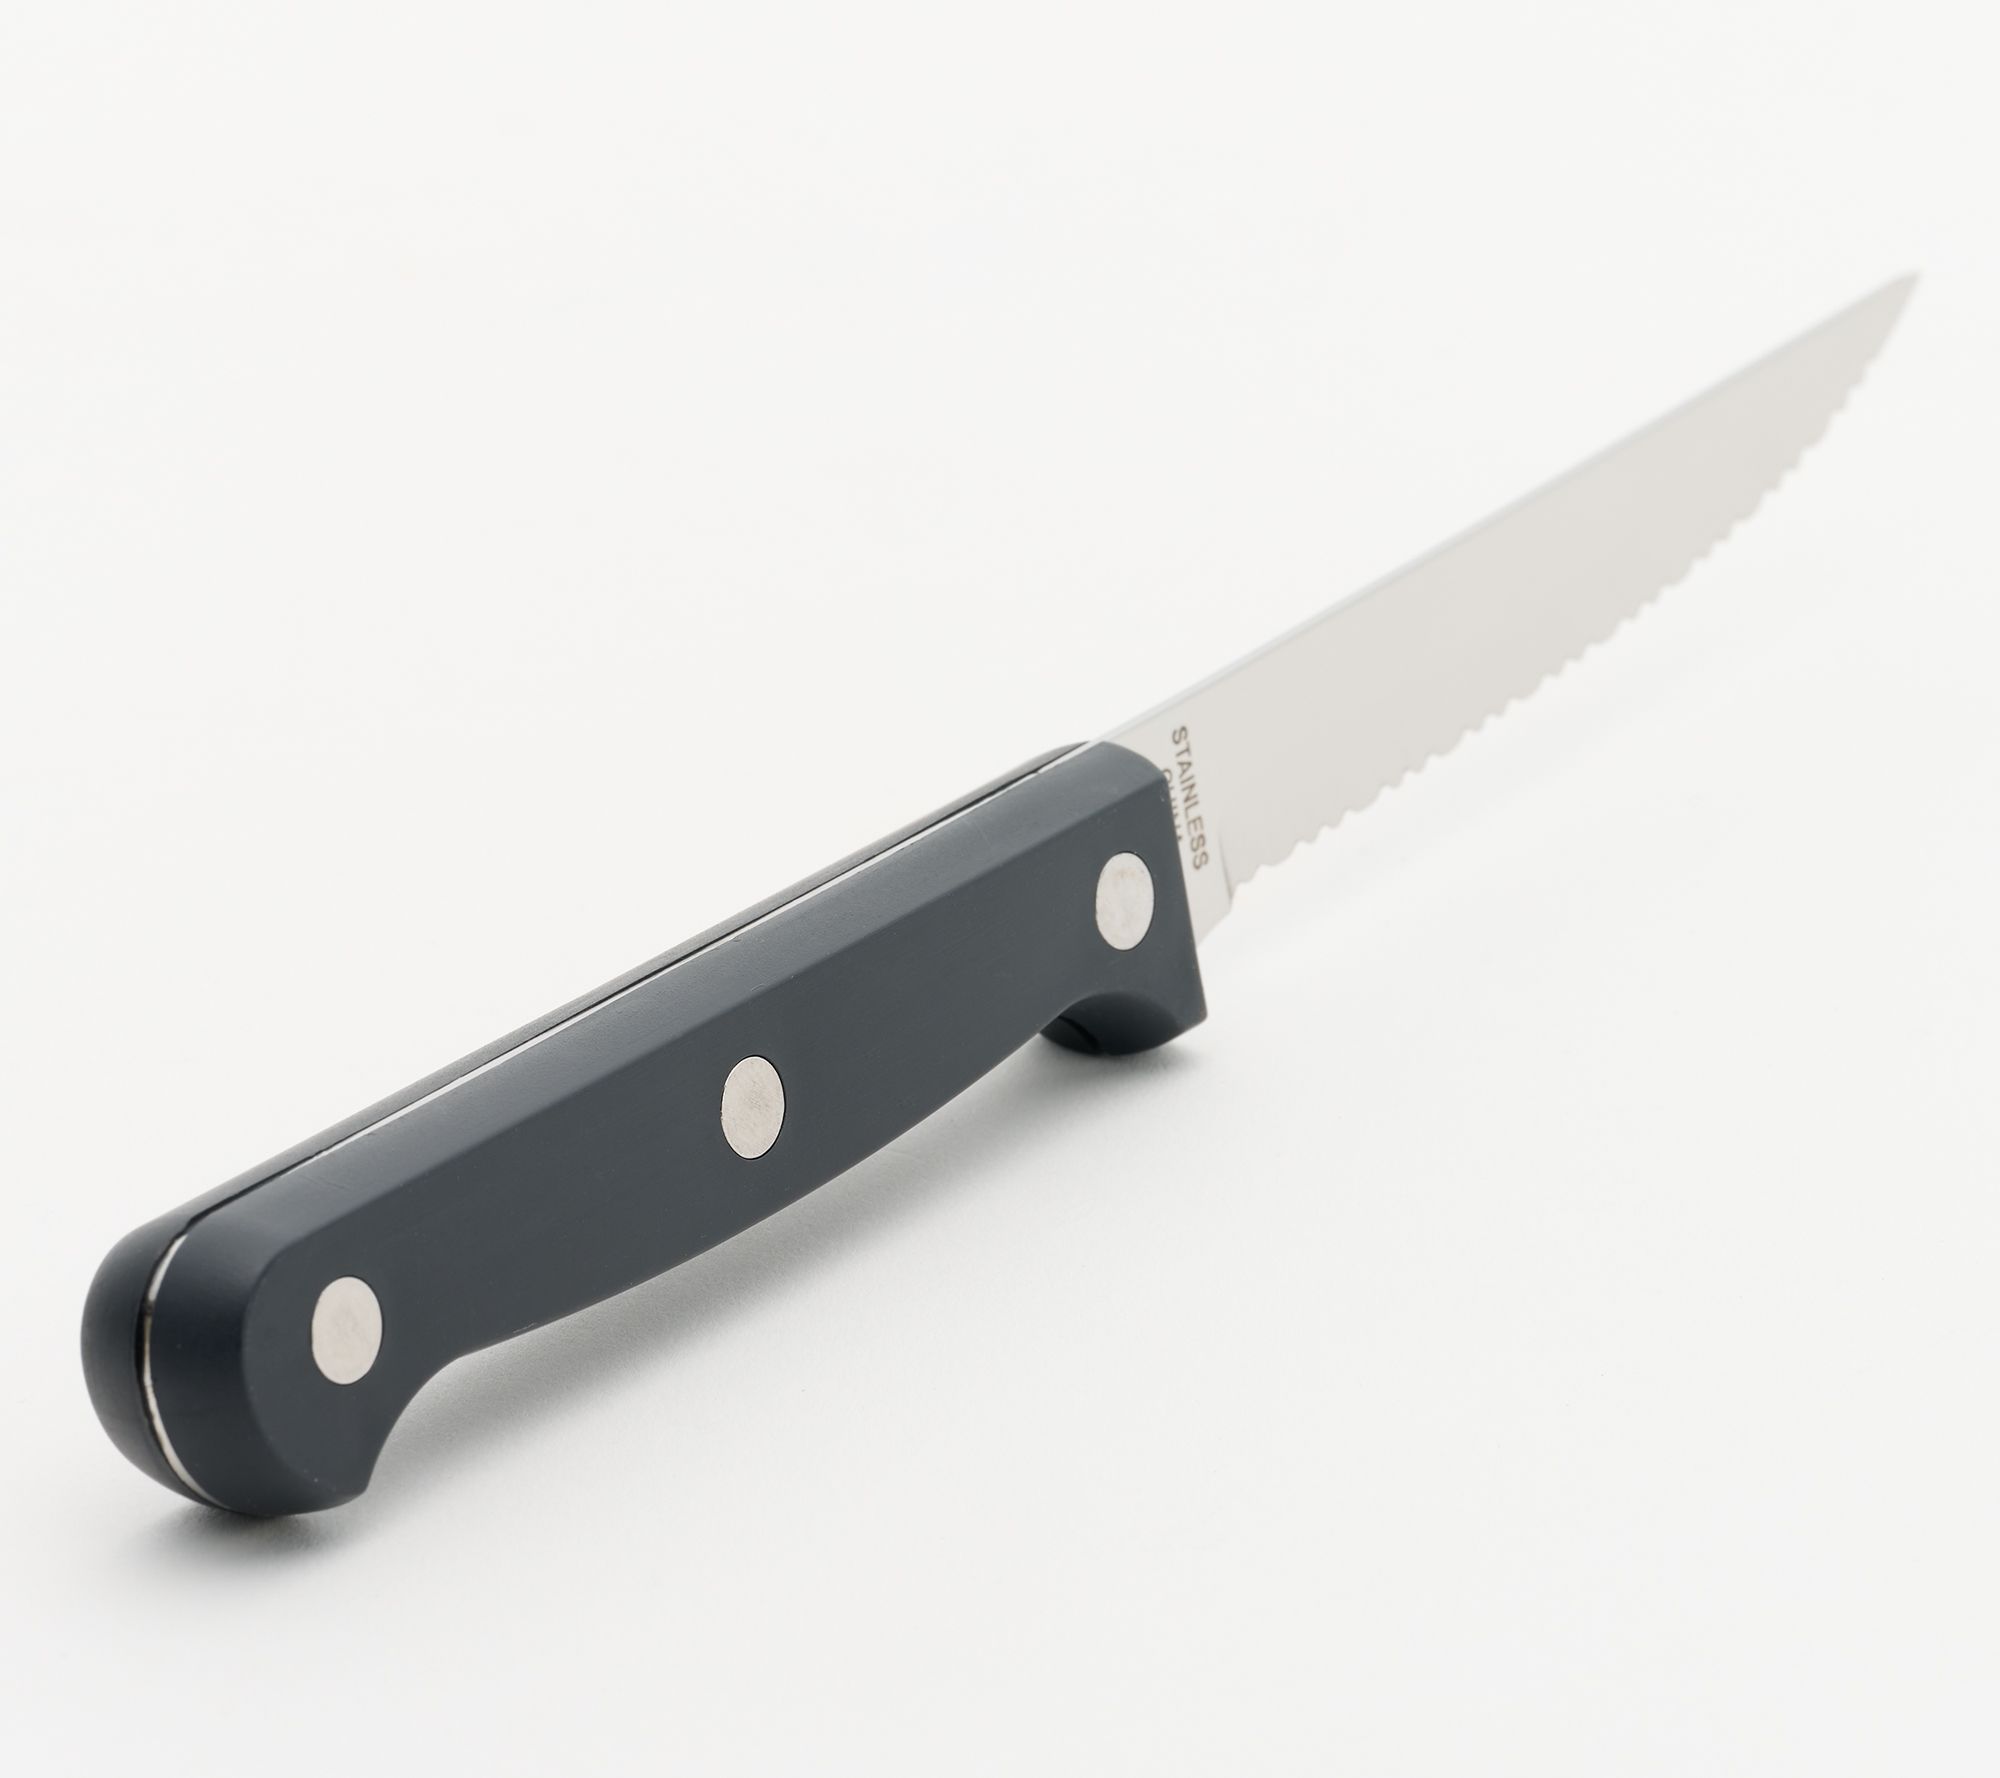 Ginsu Kiso 6-Piece Black Steak Knife Set - Dishwasher Safe and Always Sharp